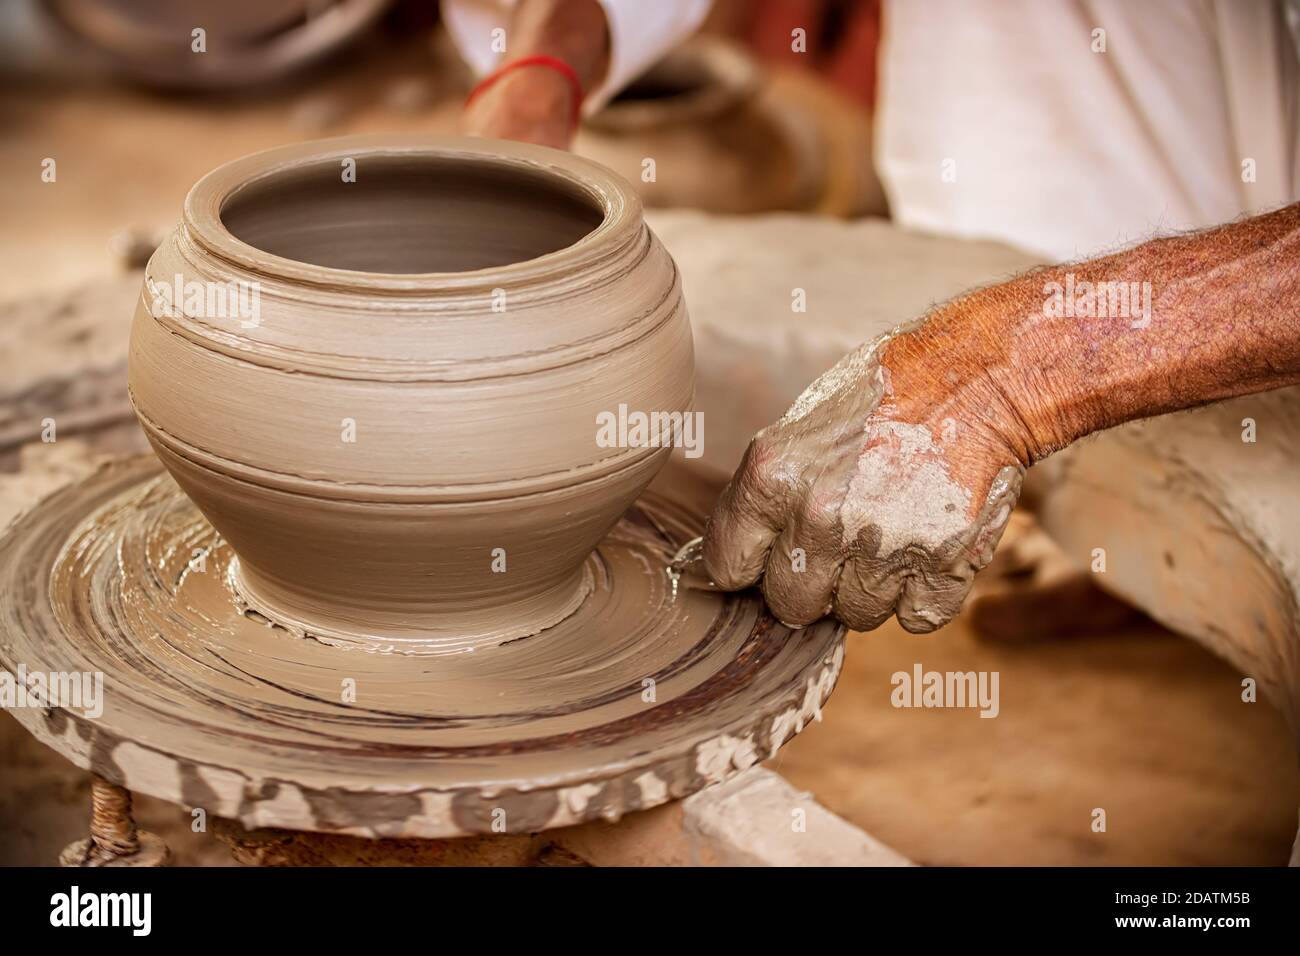 Potter at work makes ceramic dishes. India, Rajasthan. Stock Photo